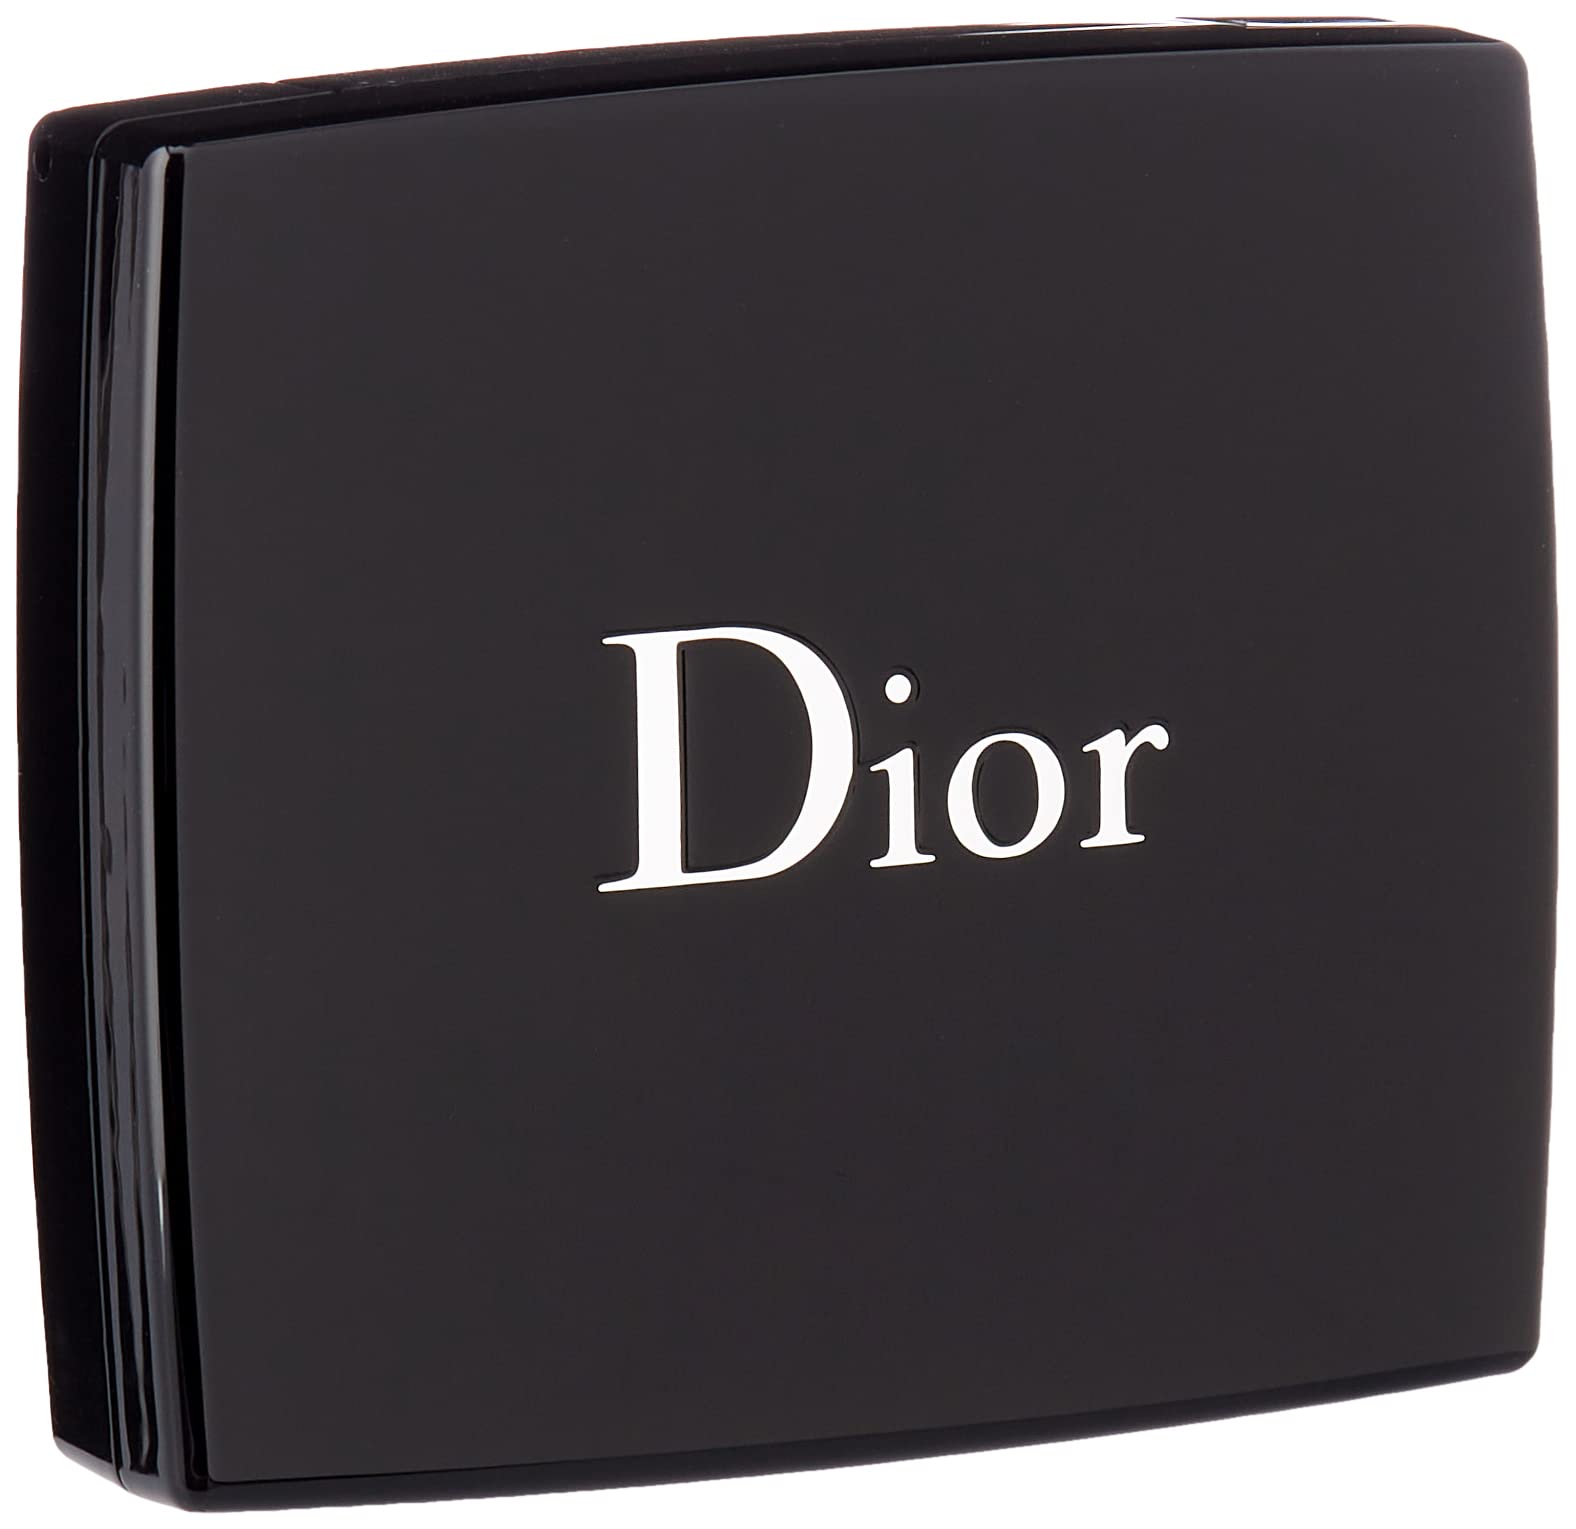 Dior Mono Couleur Couture High Color Eyeshadow Palette 2g (658 Beige Mitzah Metallic)